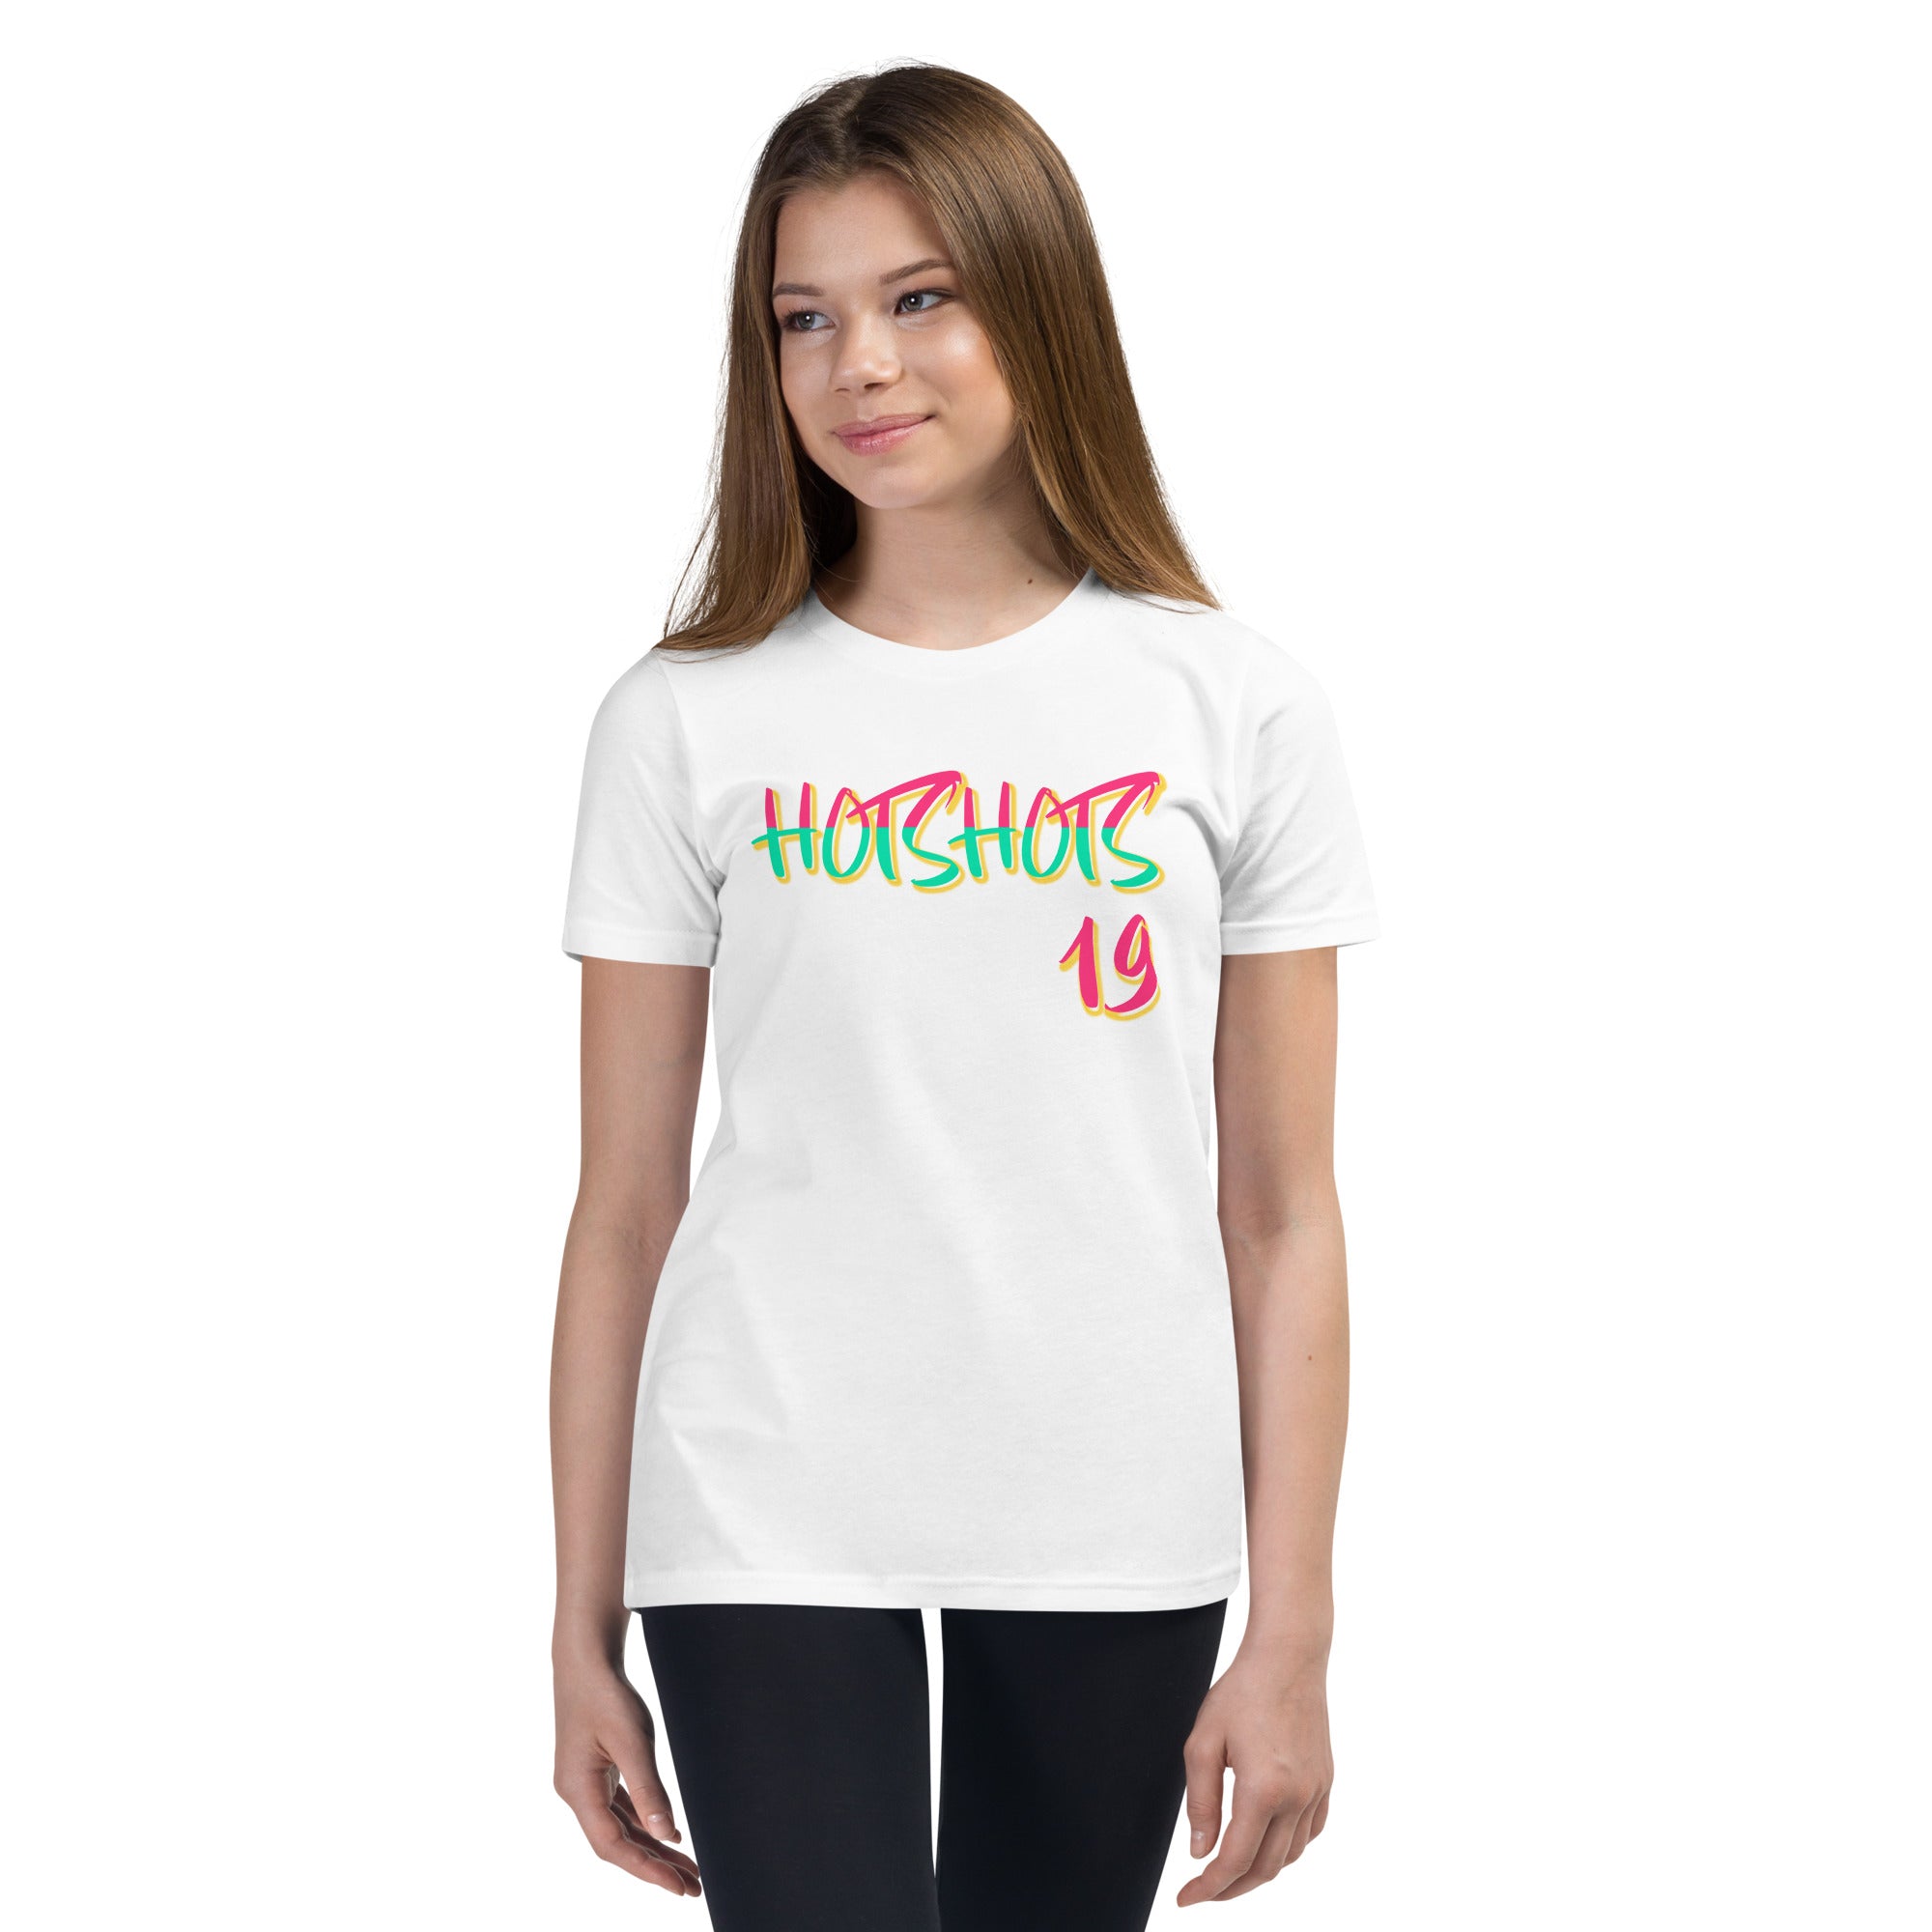 Hotshots 22 Youth Short Sleeve T-Shirt